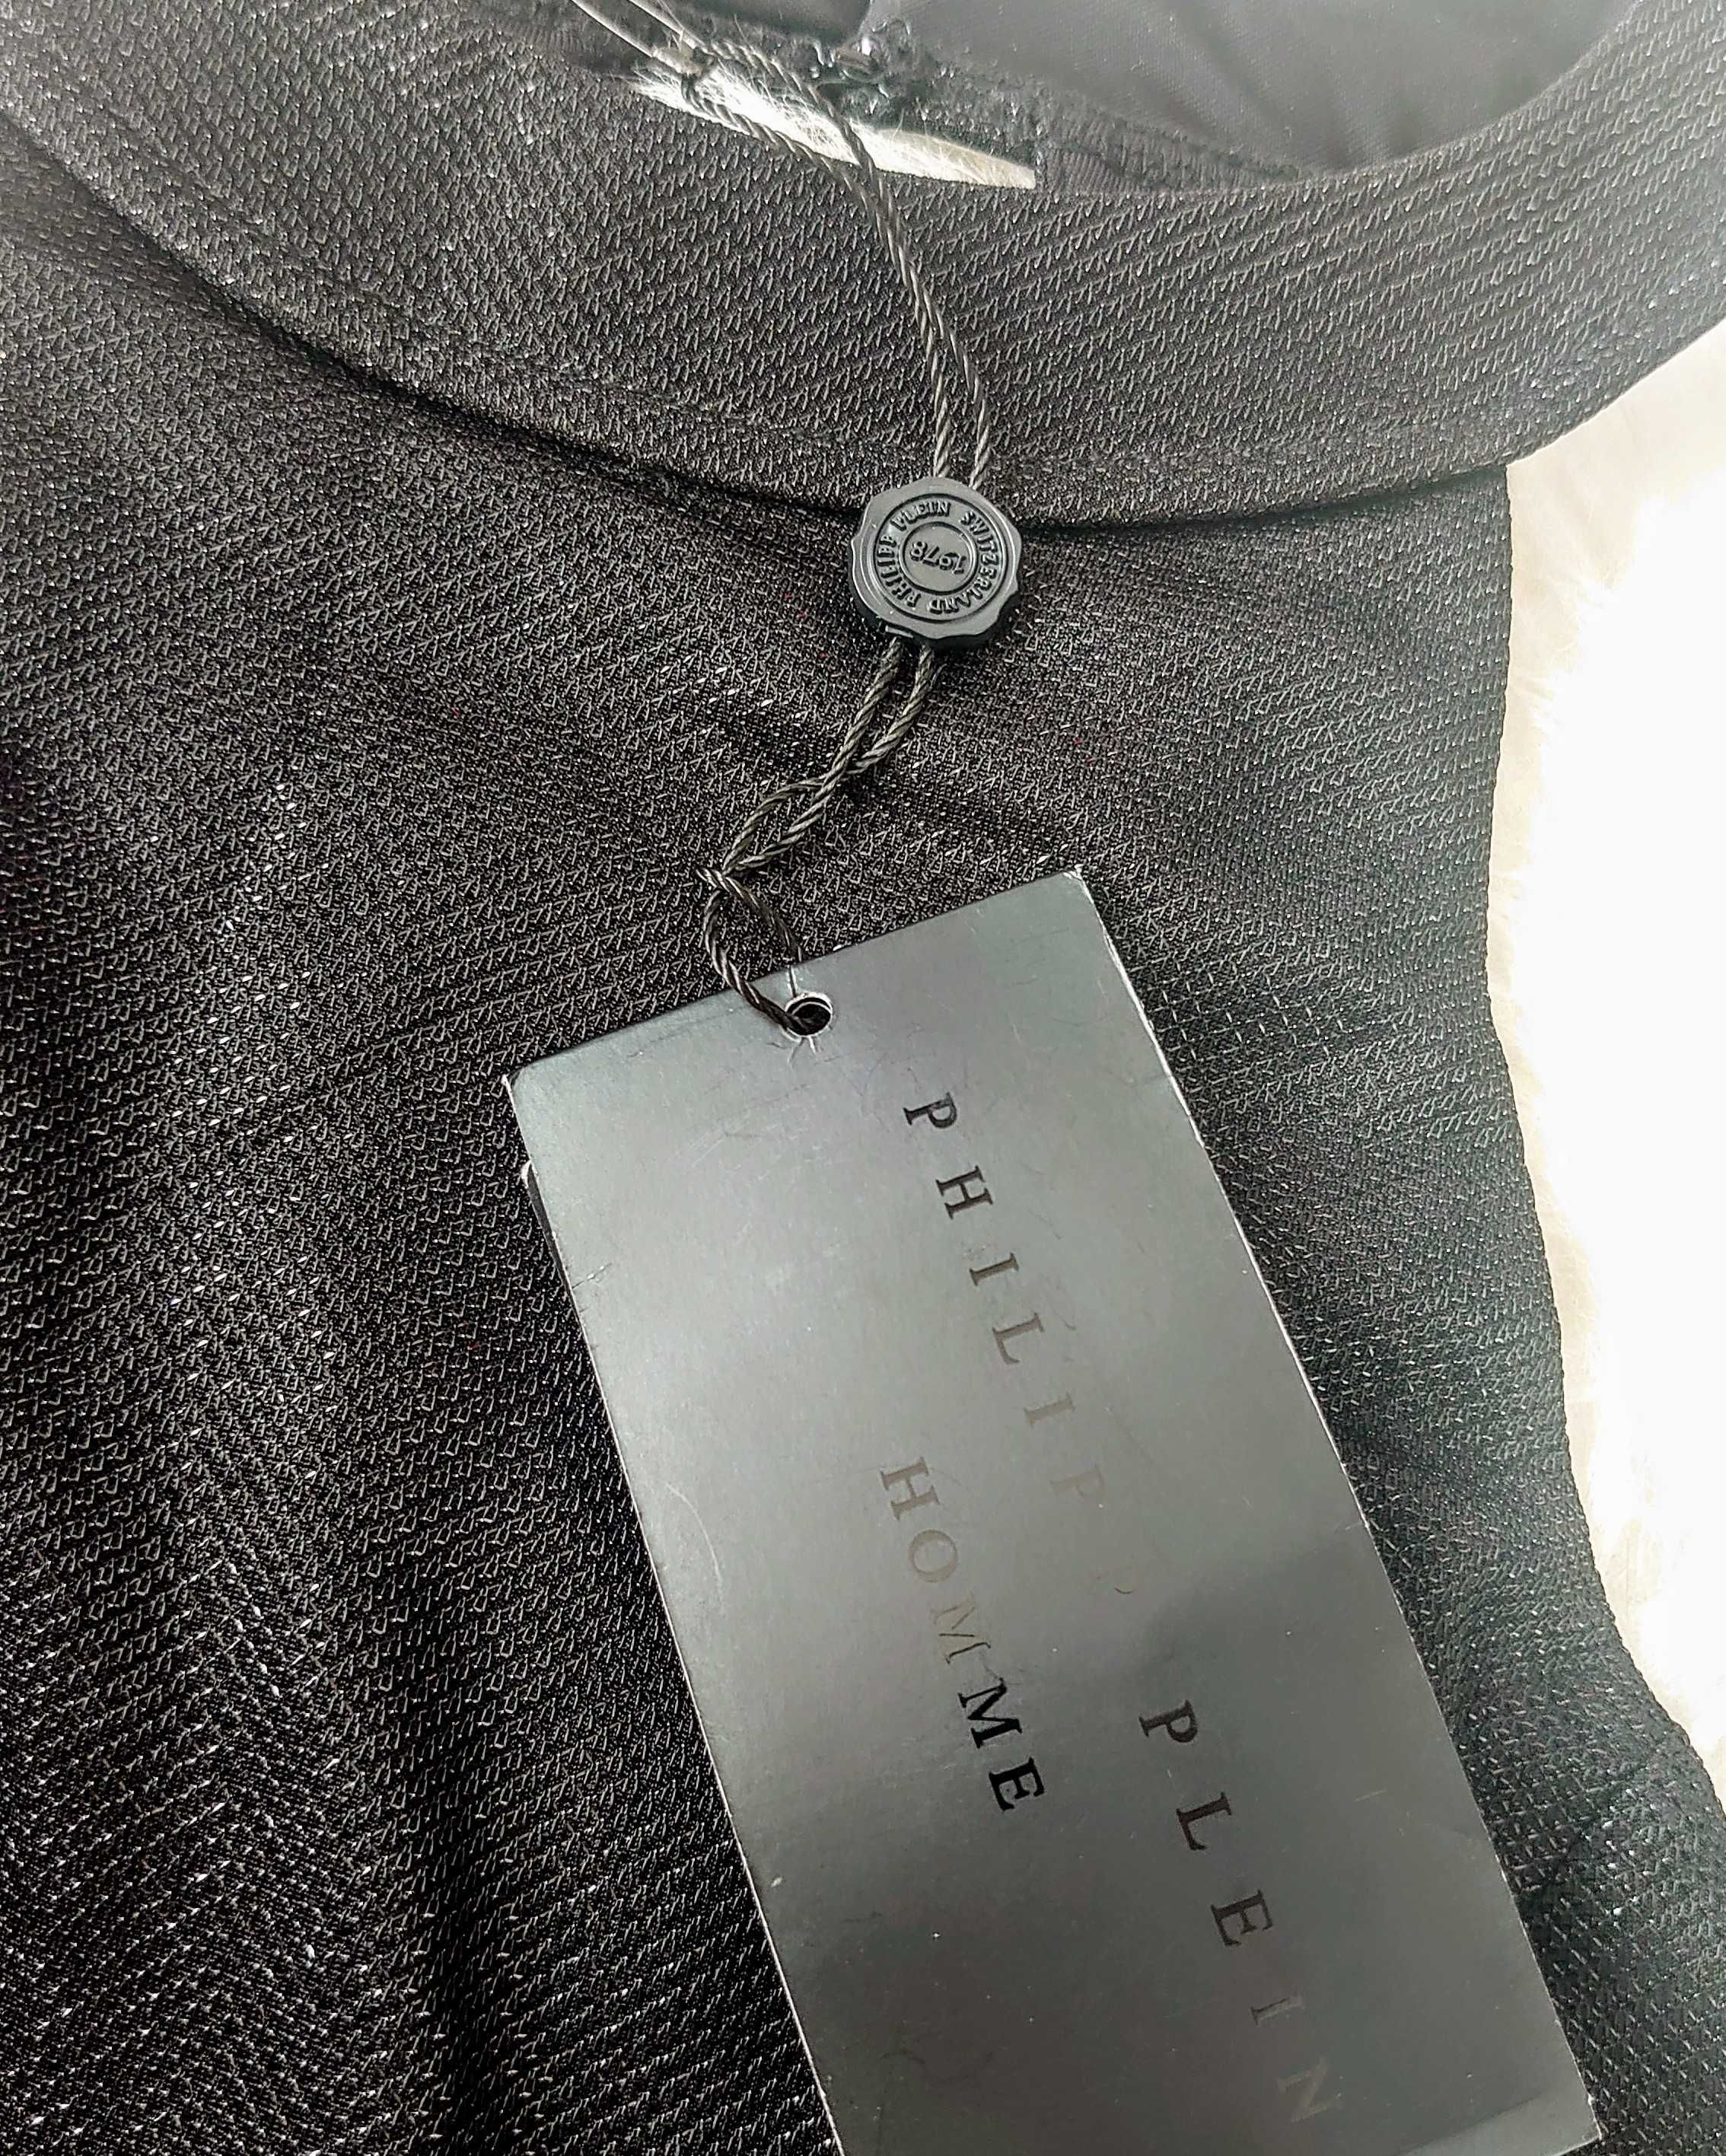 Philipp Plein PP sukienka czarna srebrna brokatowa cyrkonie sylwester